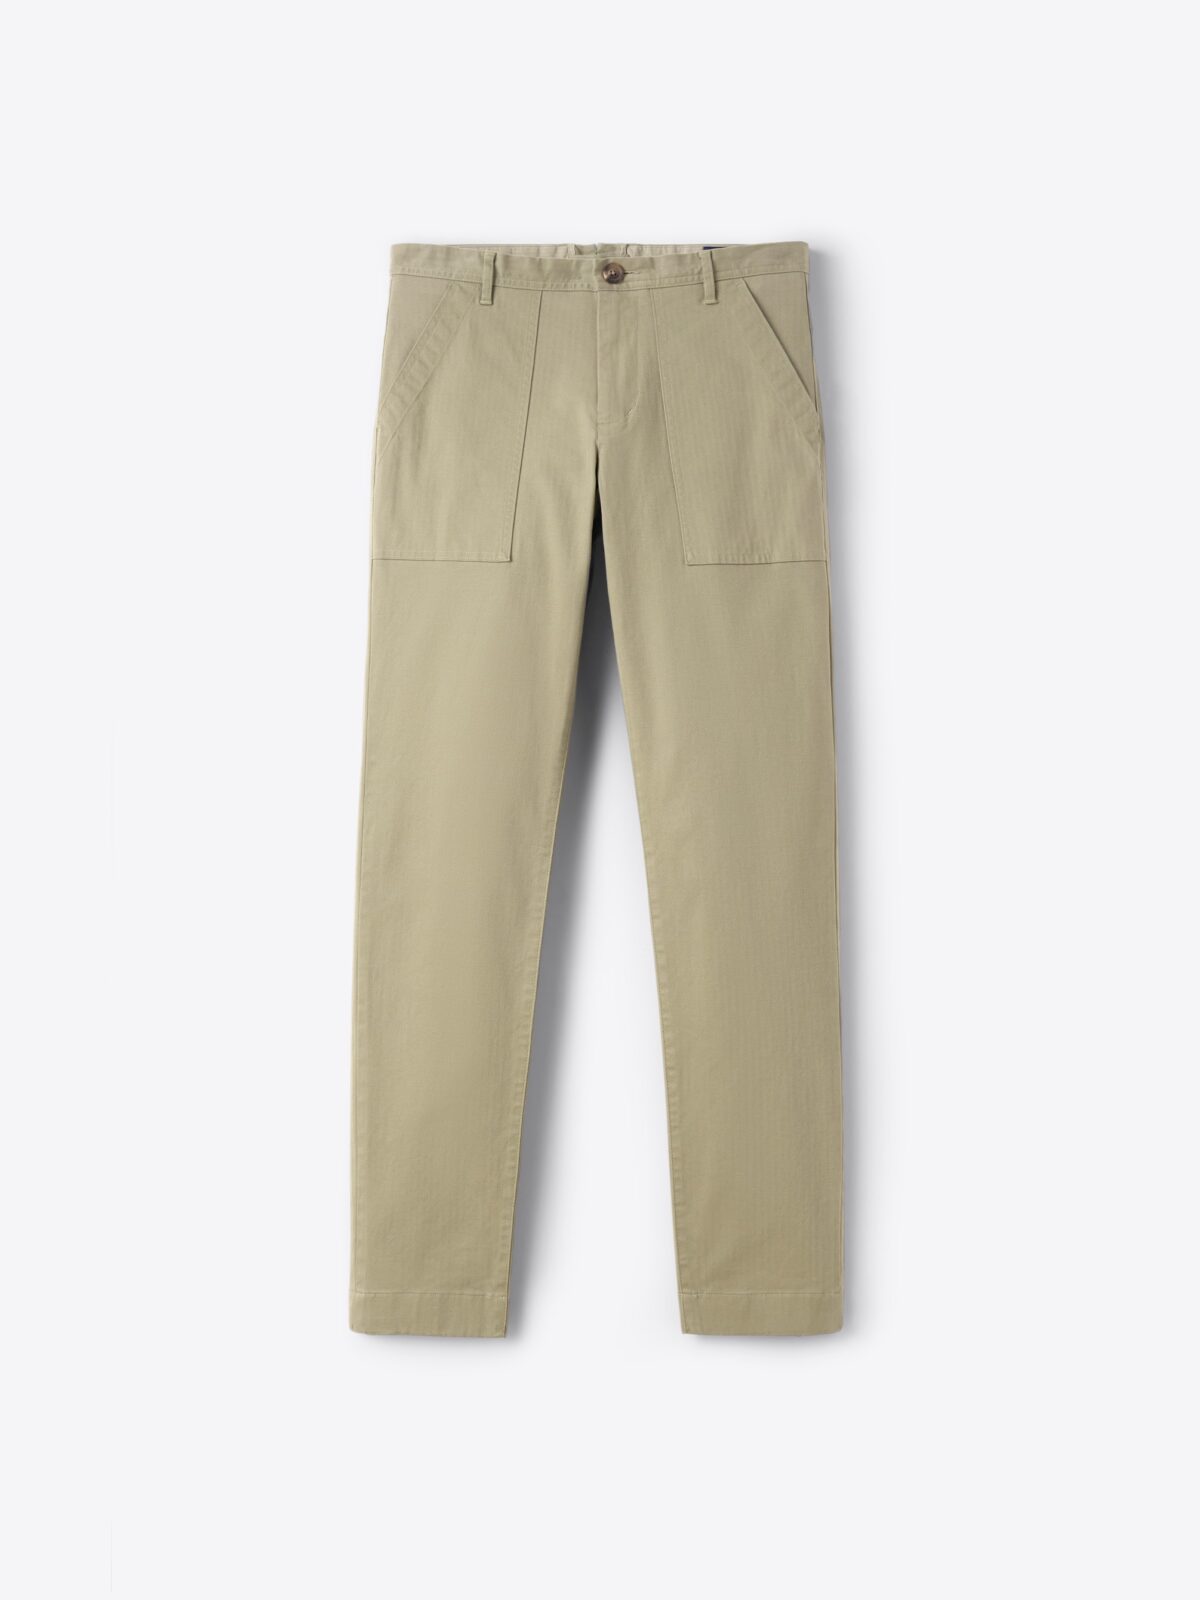 Khaki Herringbone Canvas Fatigue Pant - Custom Fit Pants